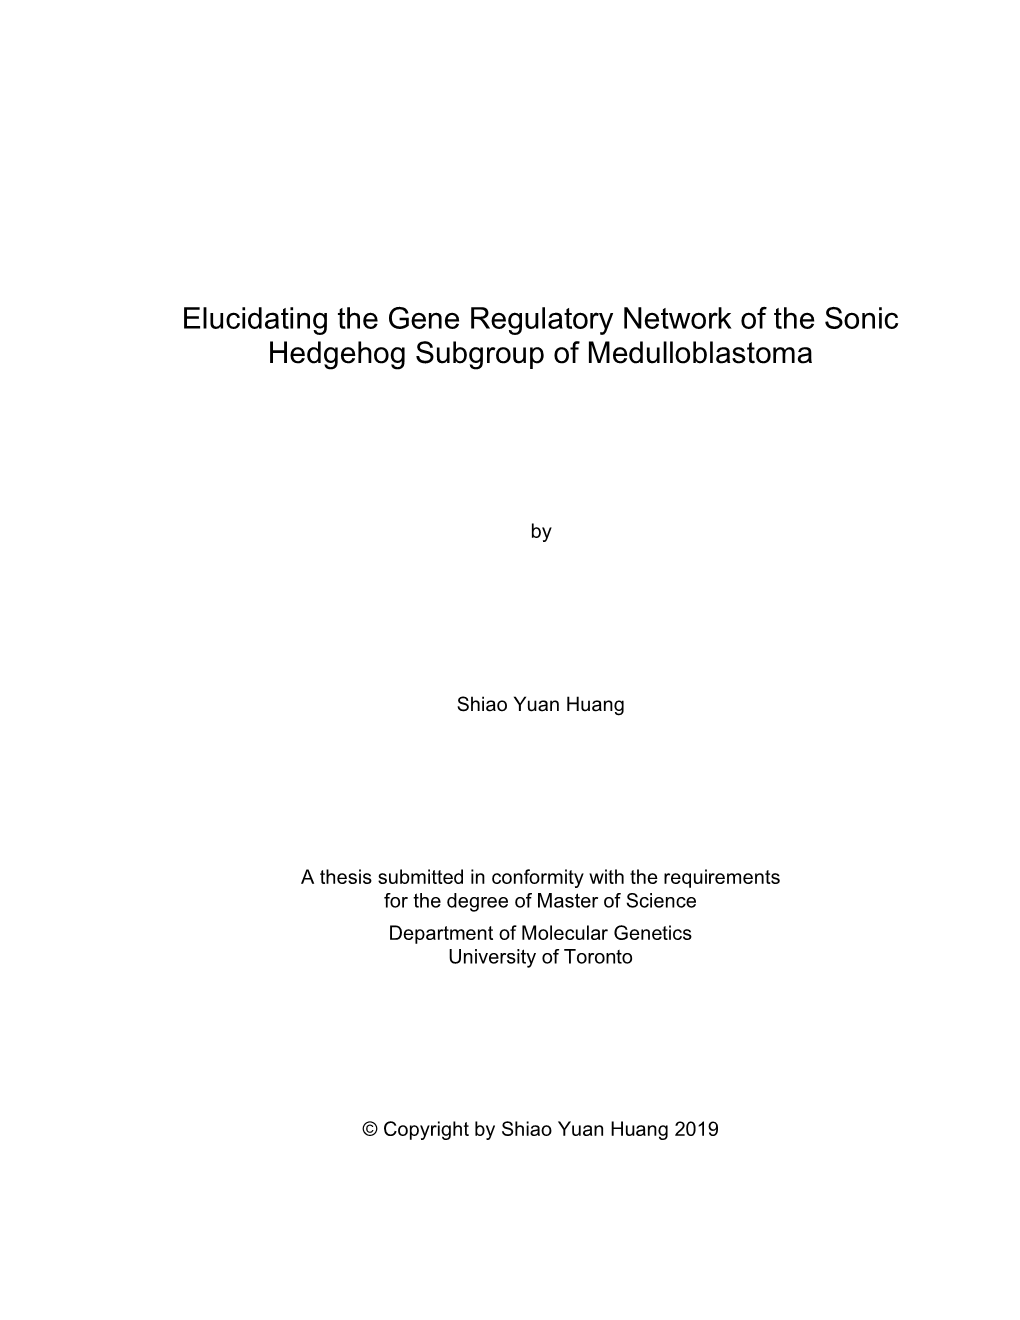 Elucidating the Gene Regulatory Network of the Sonic Hedgehog Subgroup of Medulloblastoma